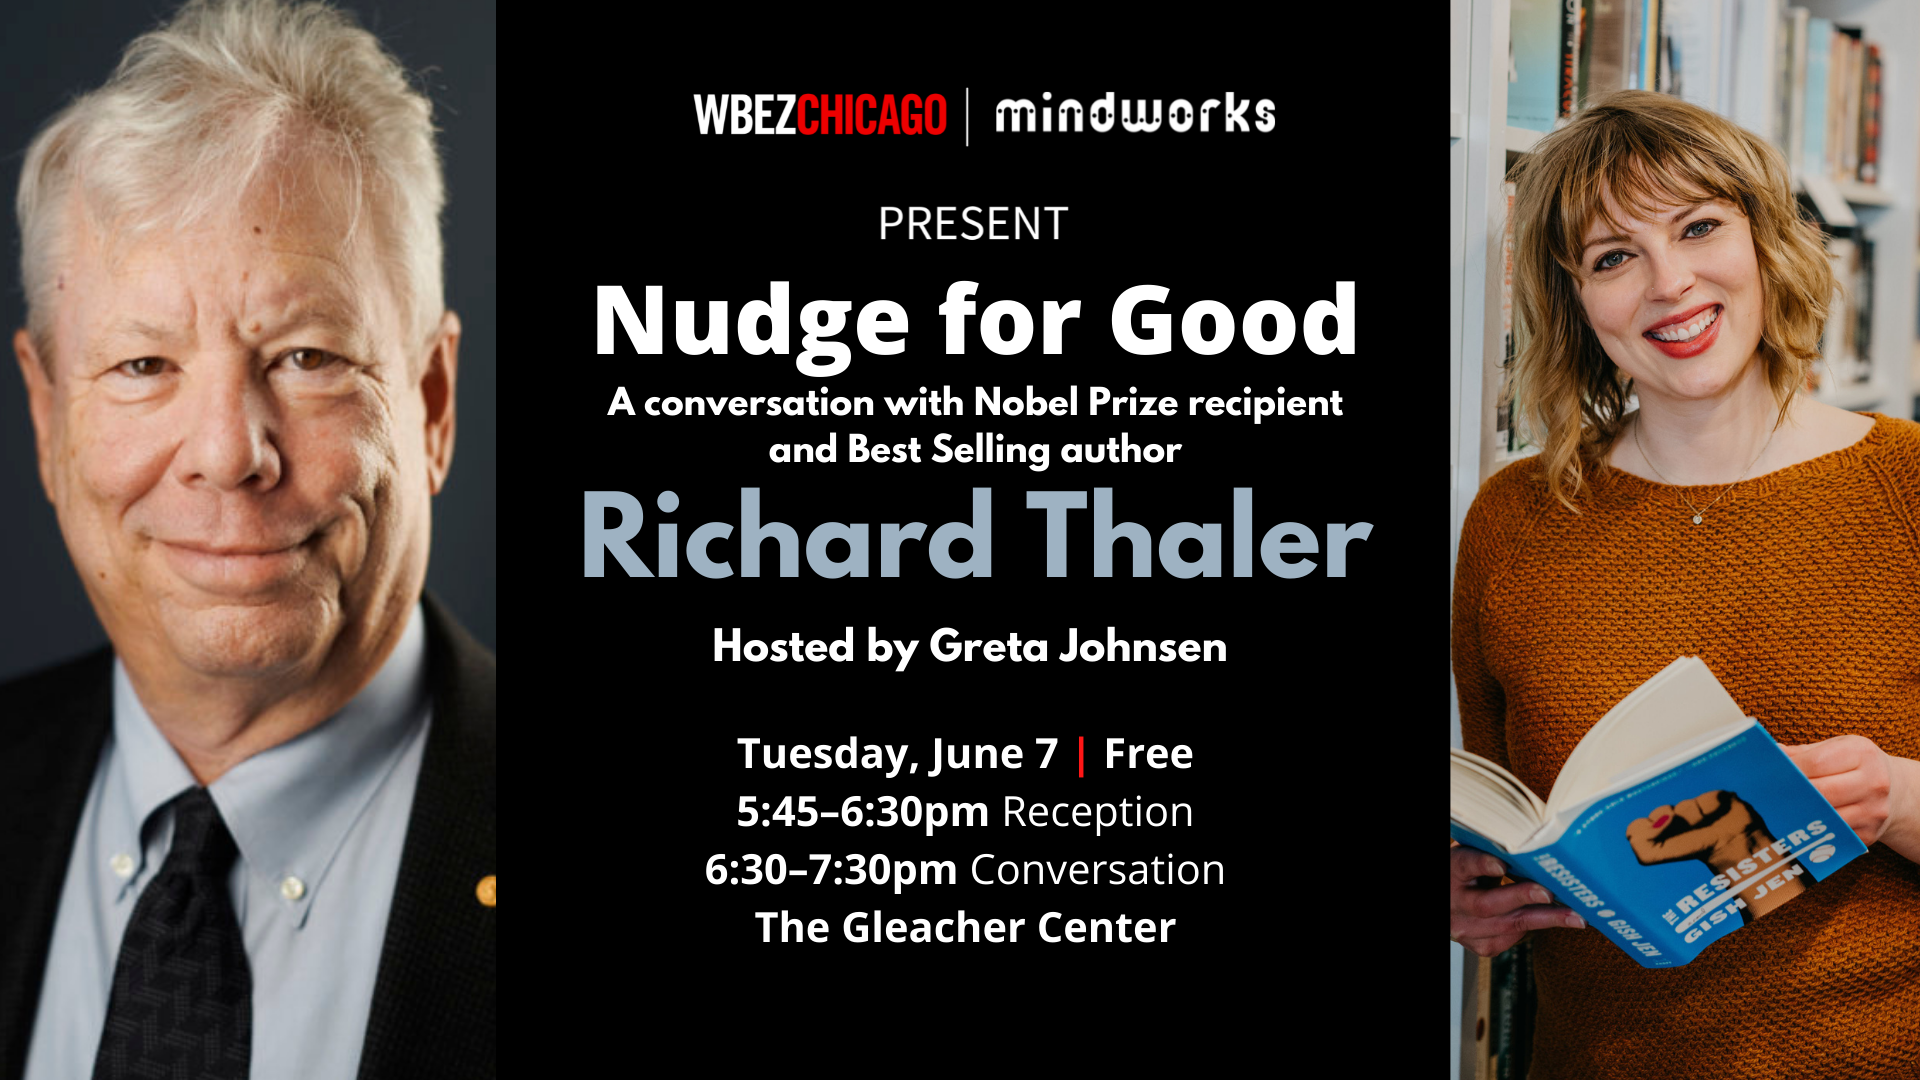 Nudge for Good: Richard Thaler in conversation with Greta Johnsen